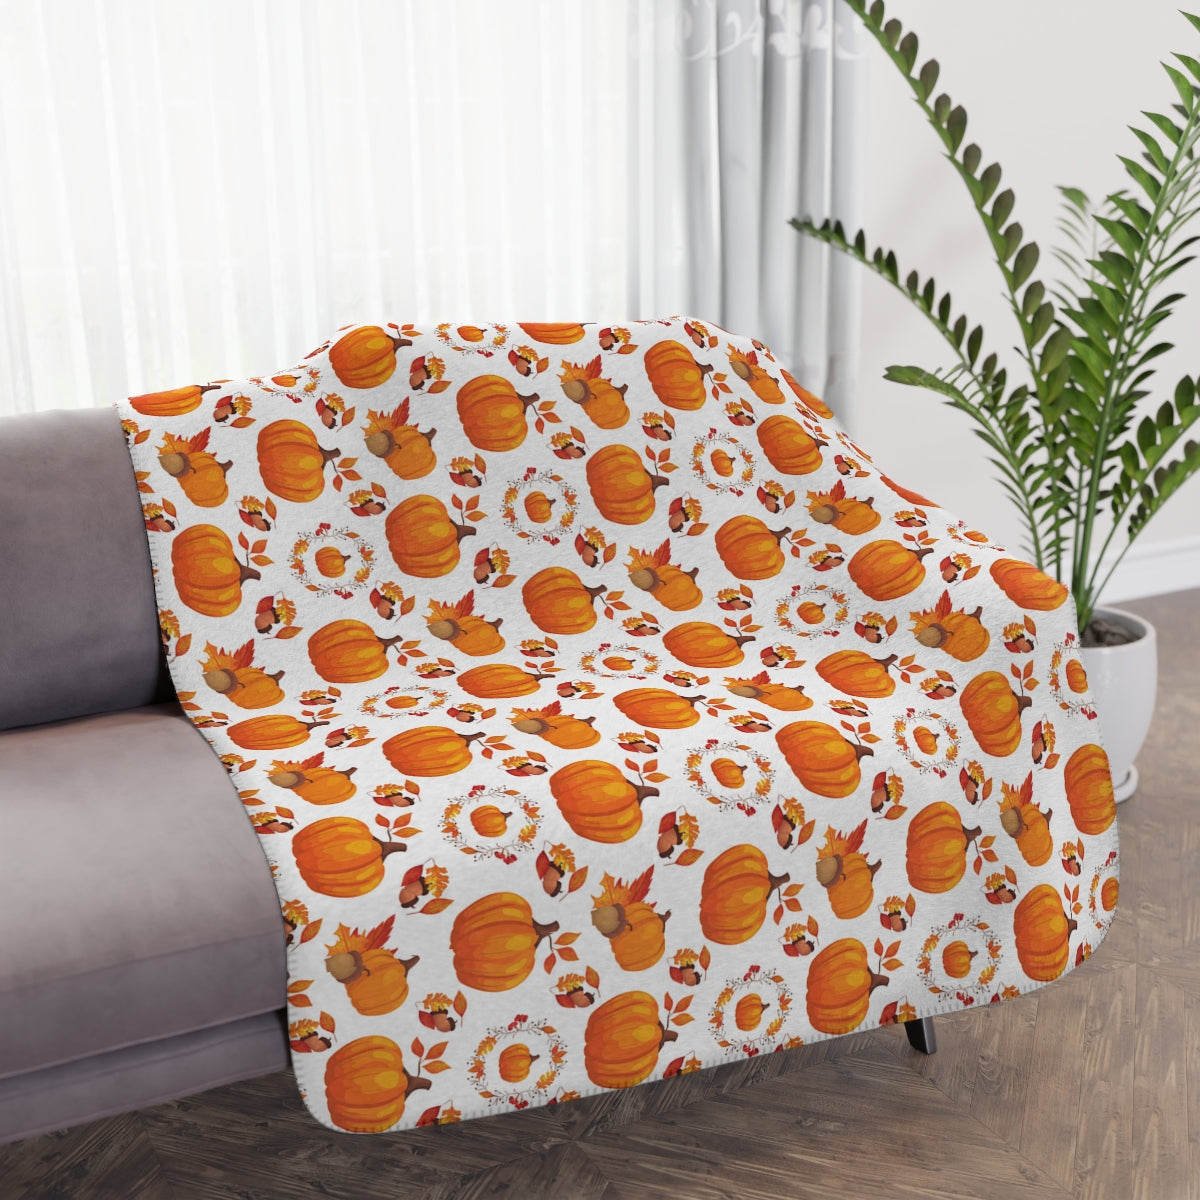 orange pumpkin sherpa blanket for fall, halloween or thanksgiving. Great for housewarming gift 